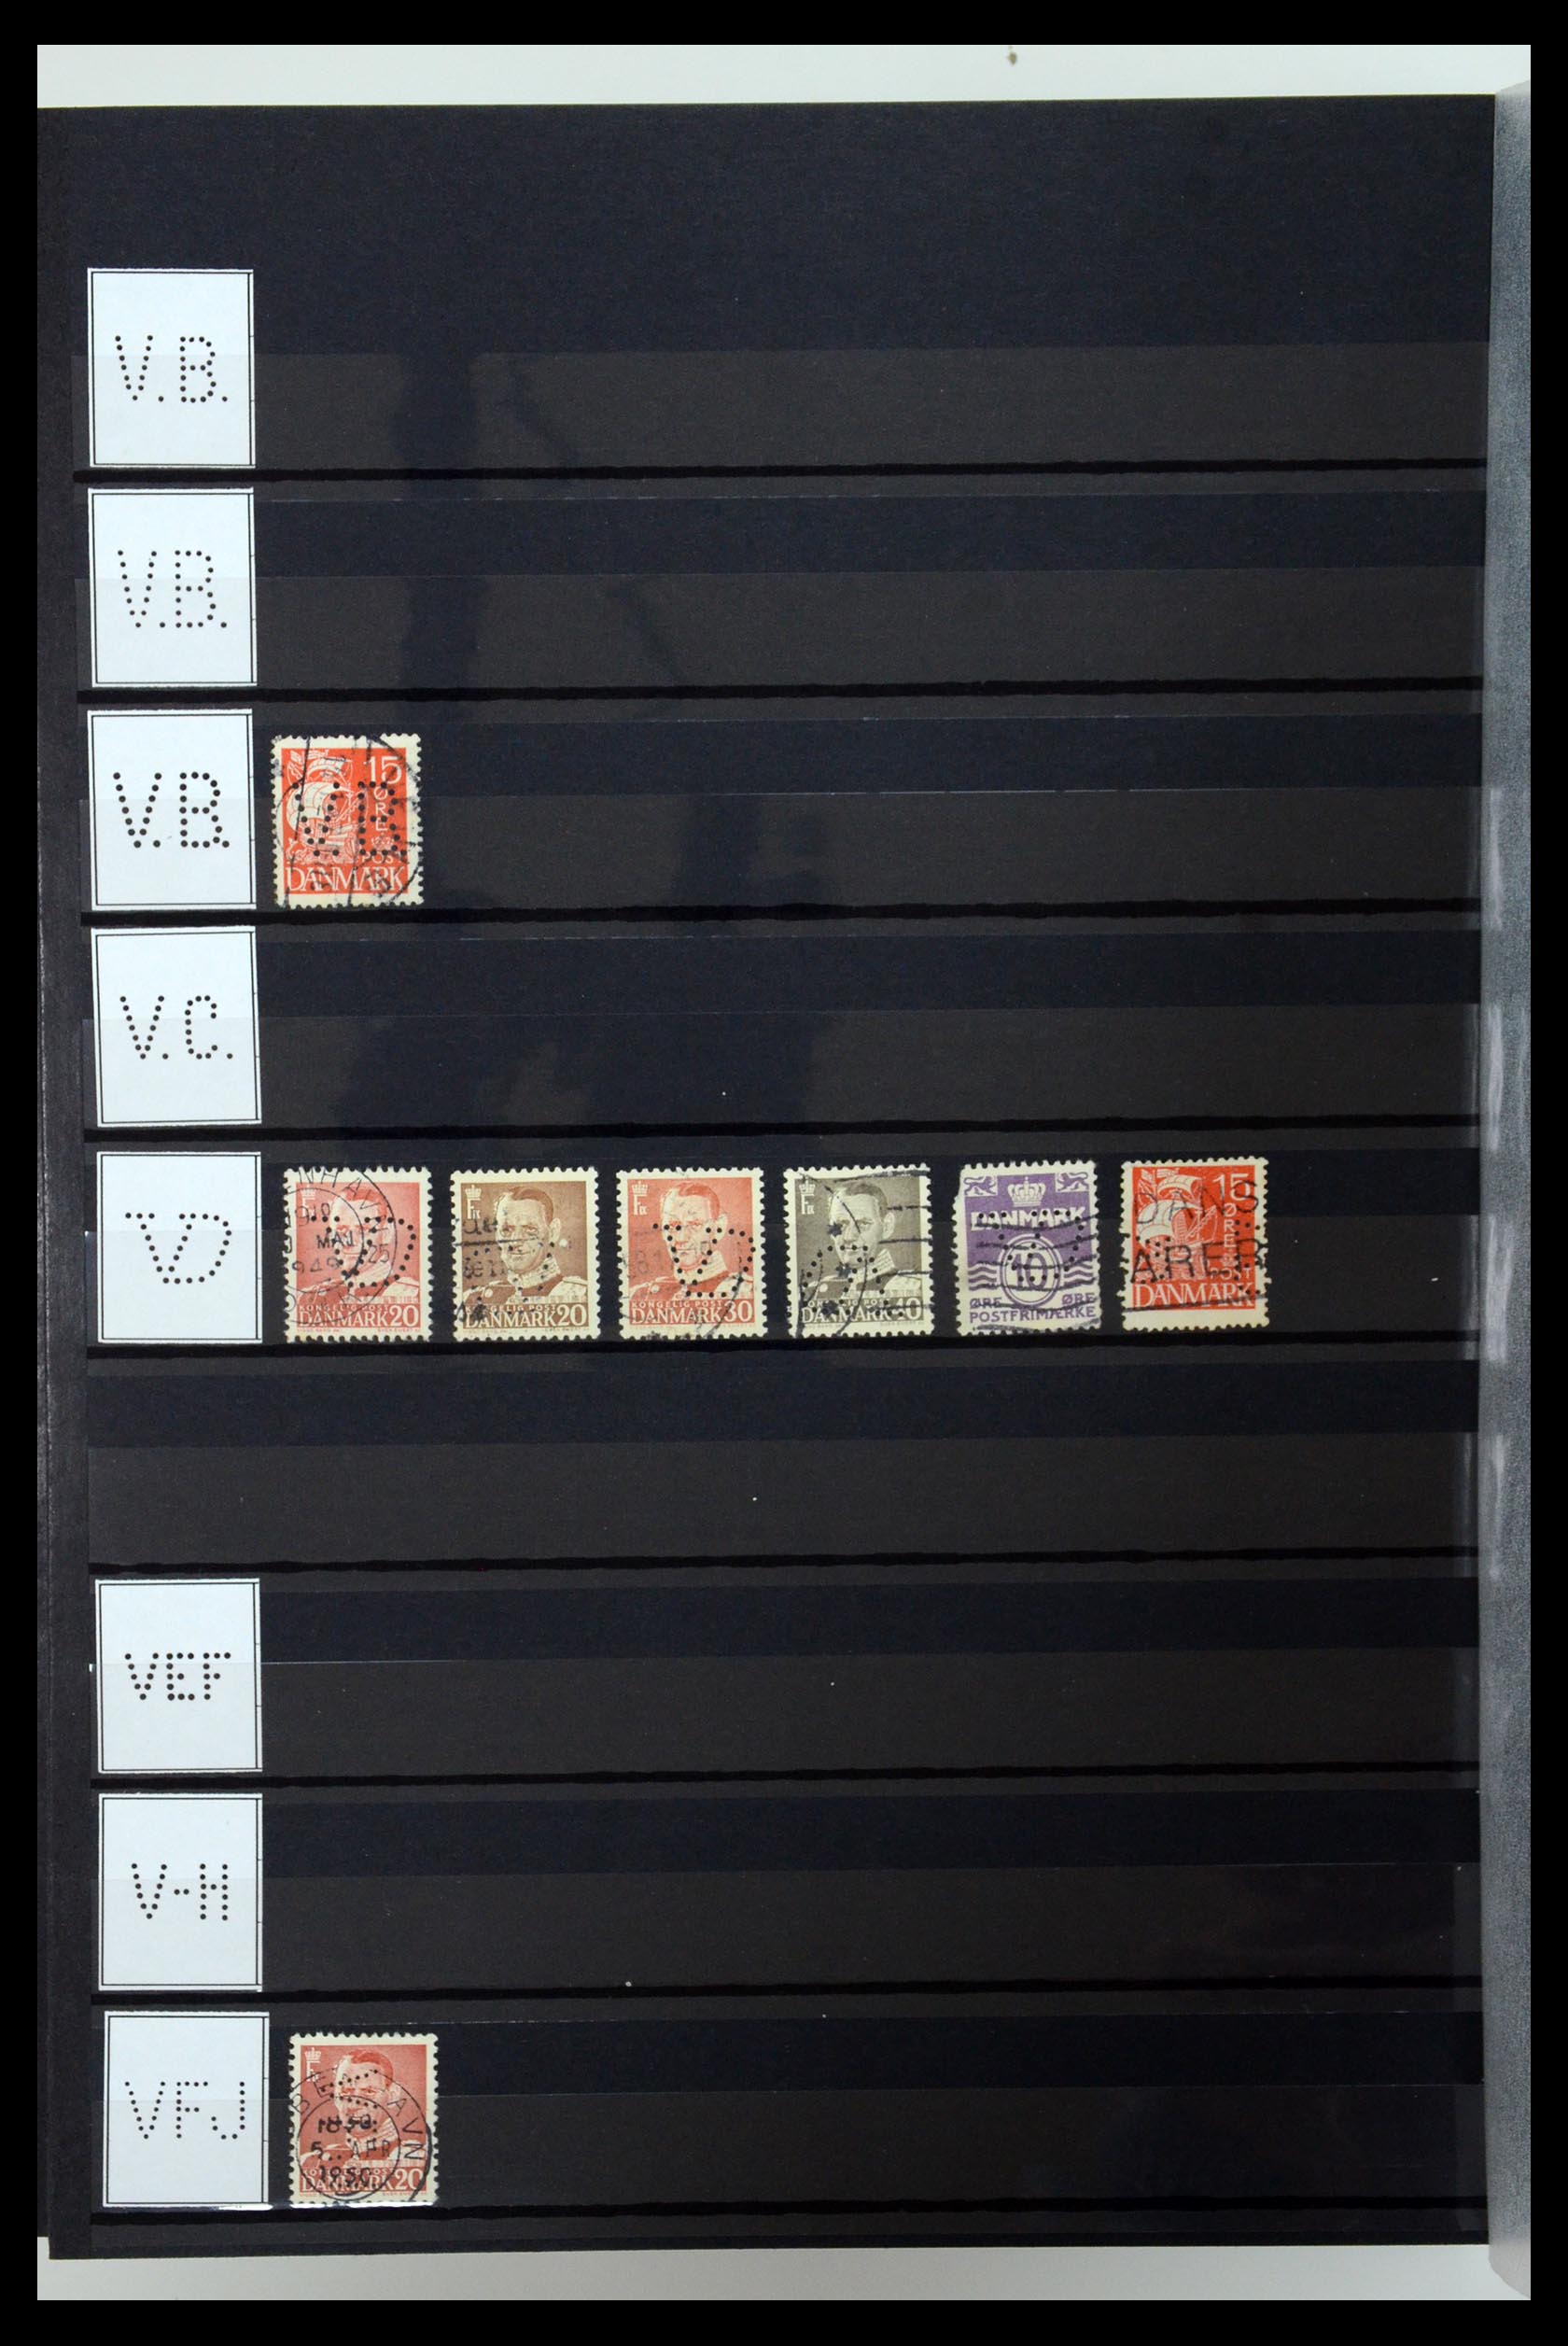 36396 221 - Stamp collection 36396 Denmark perfins.